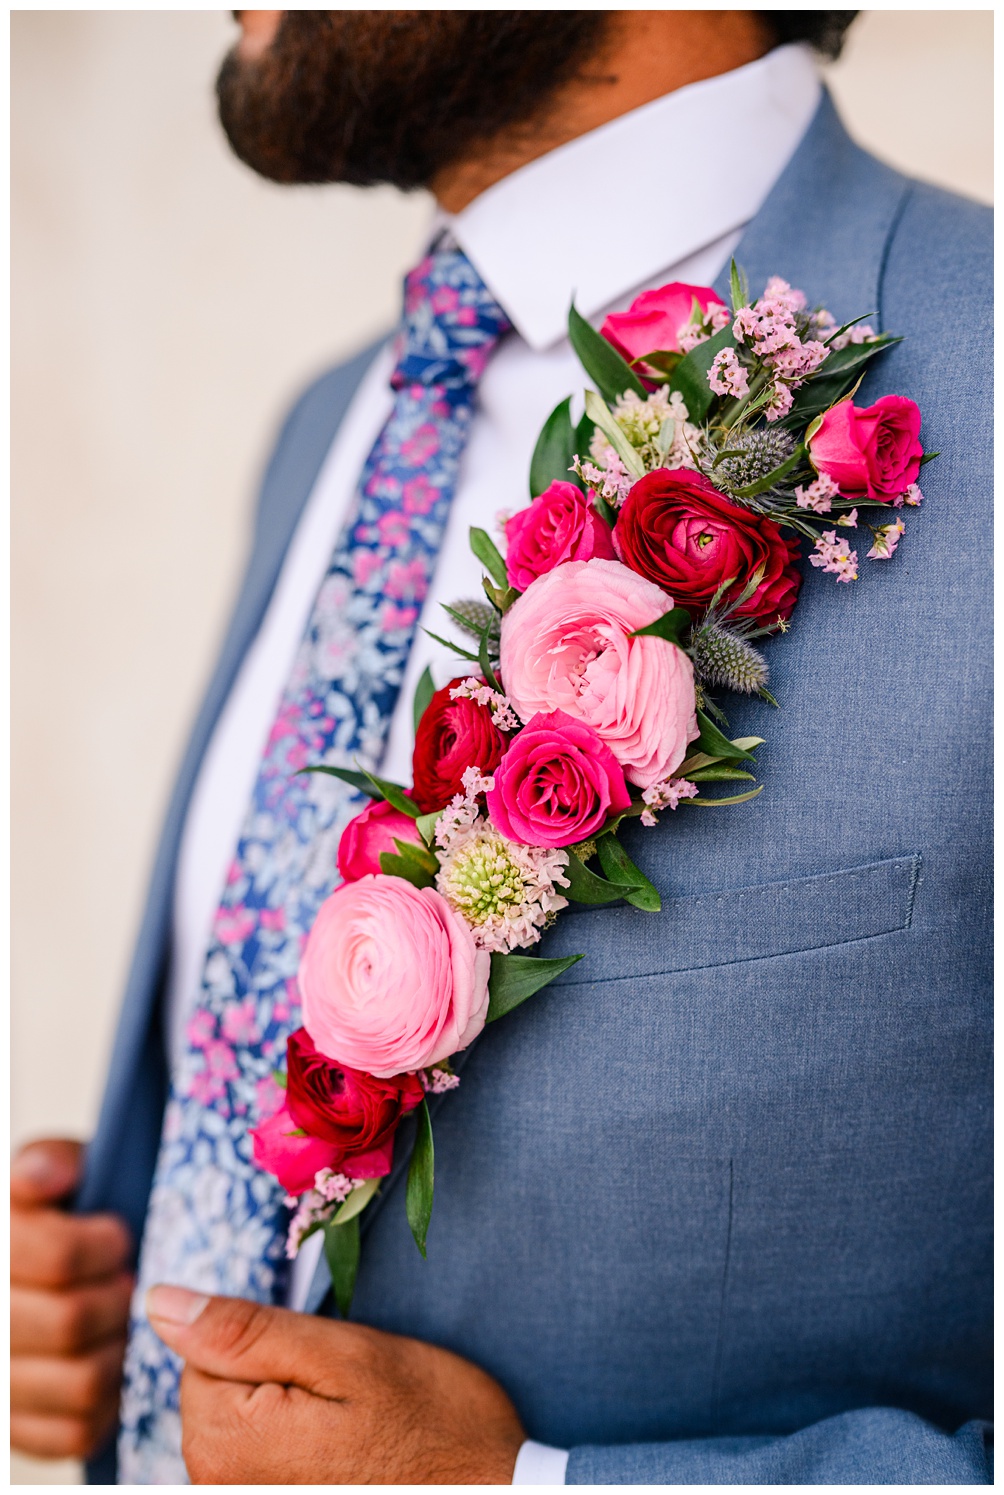 Floral Lapel by Zuzu's Petals for trendy grooms